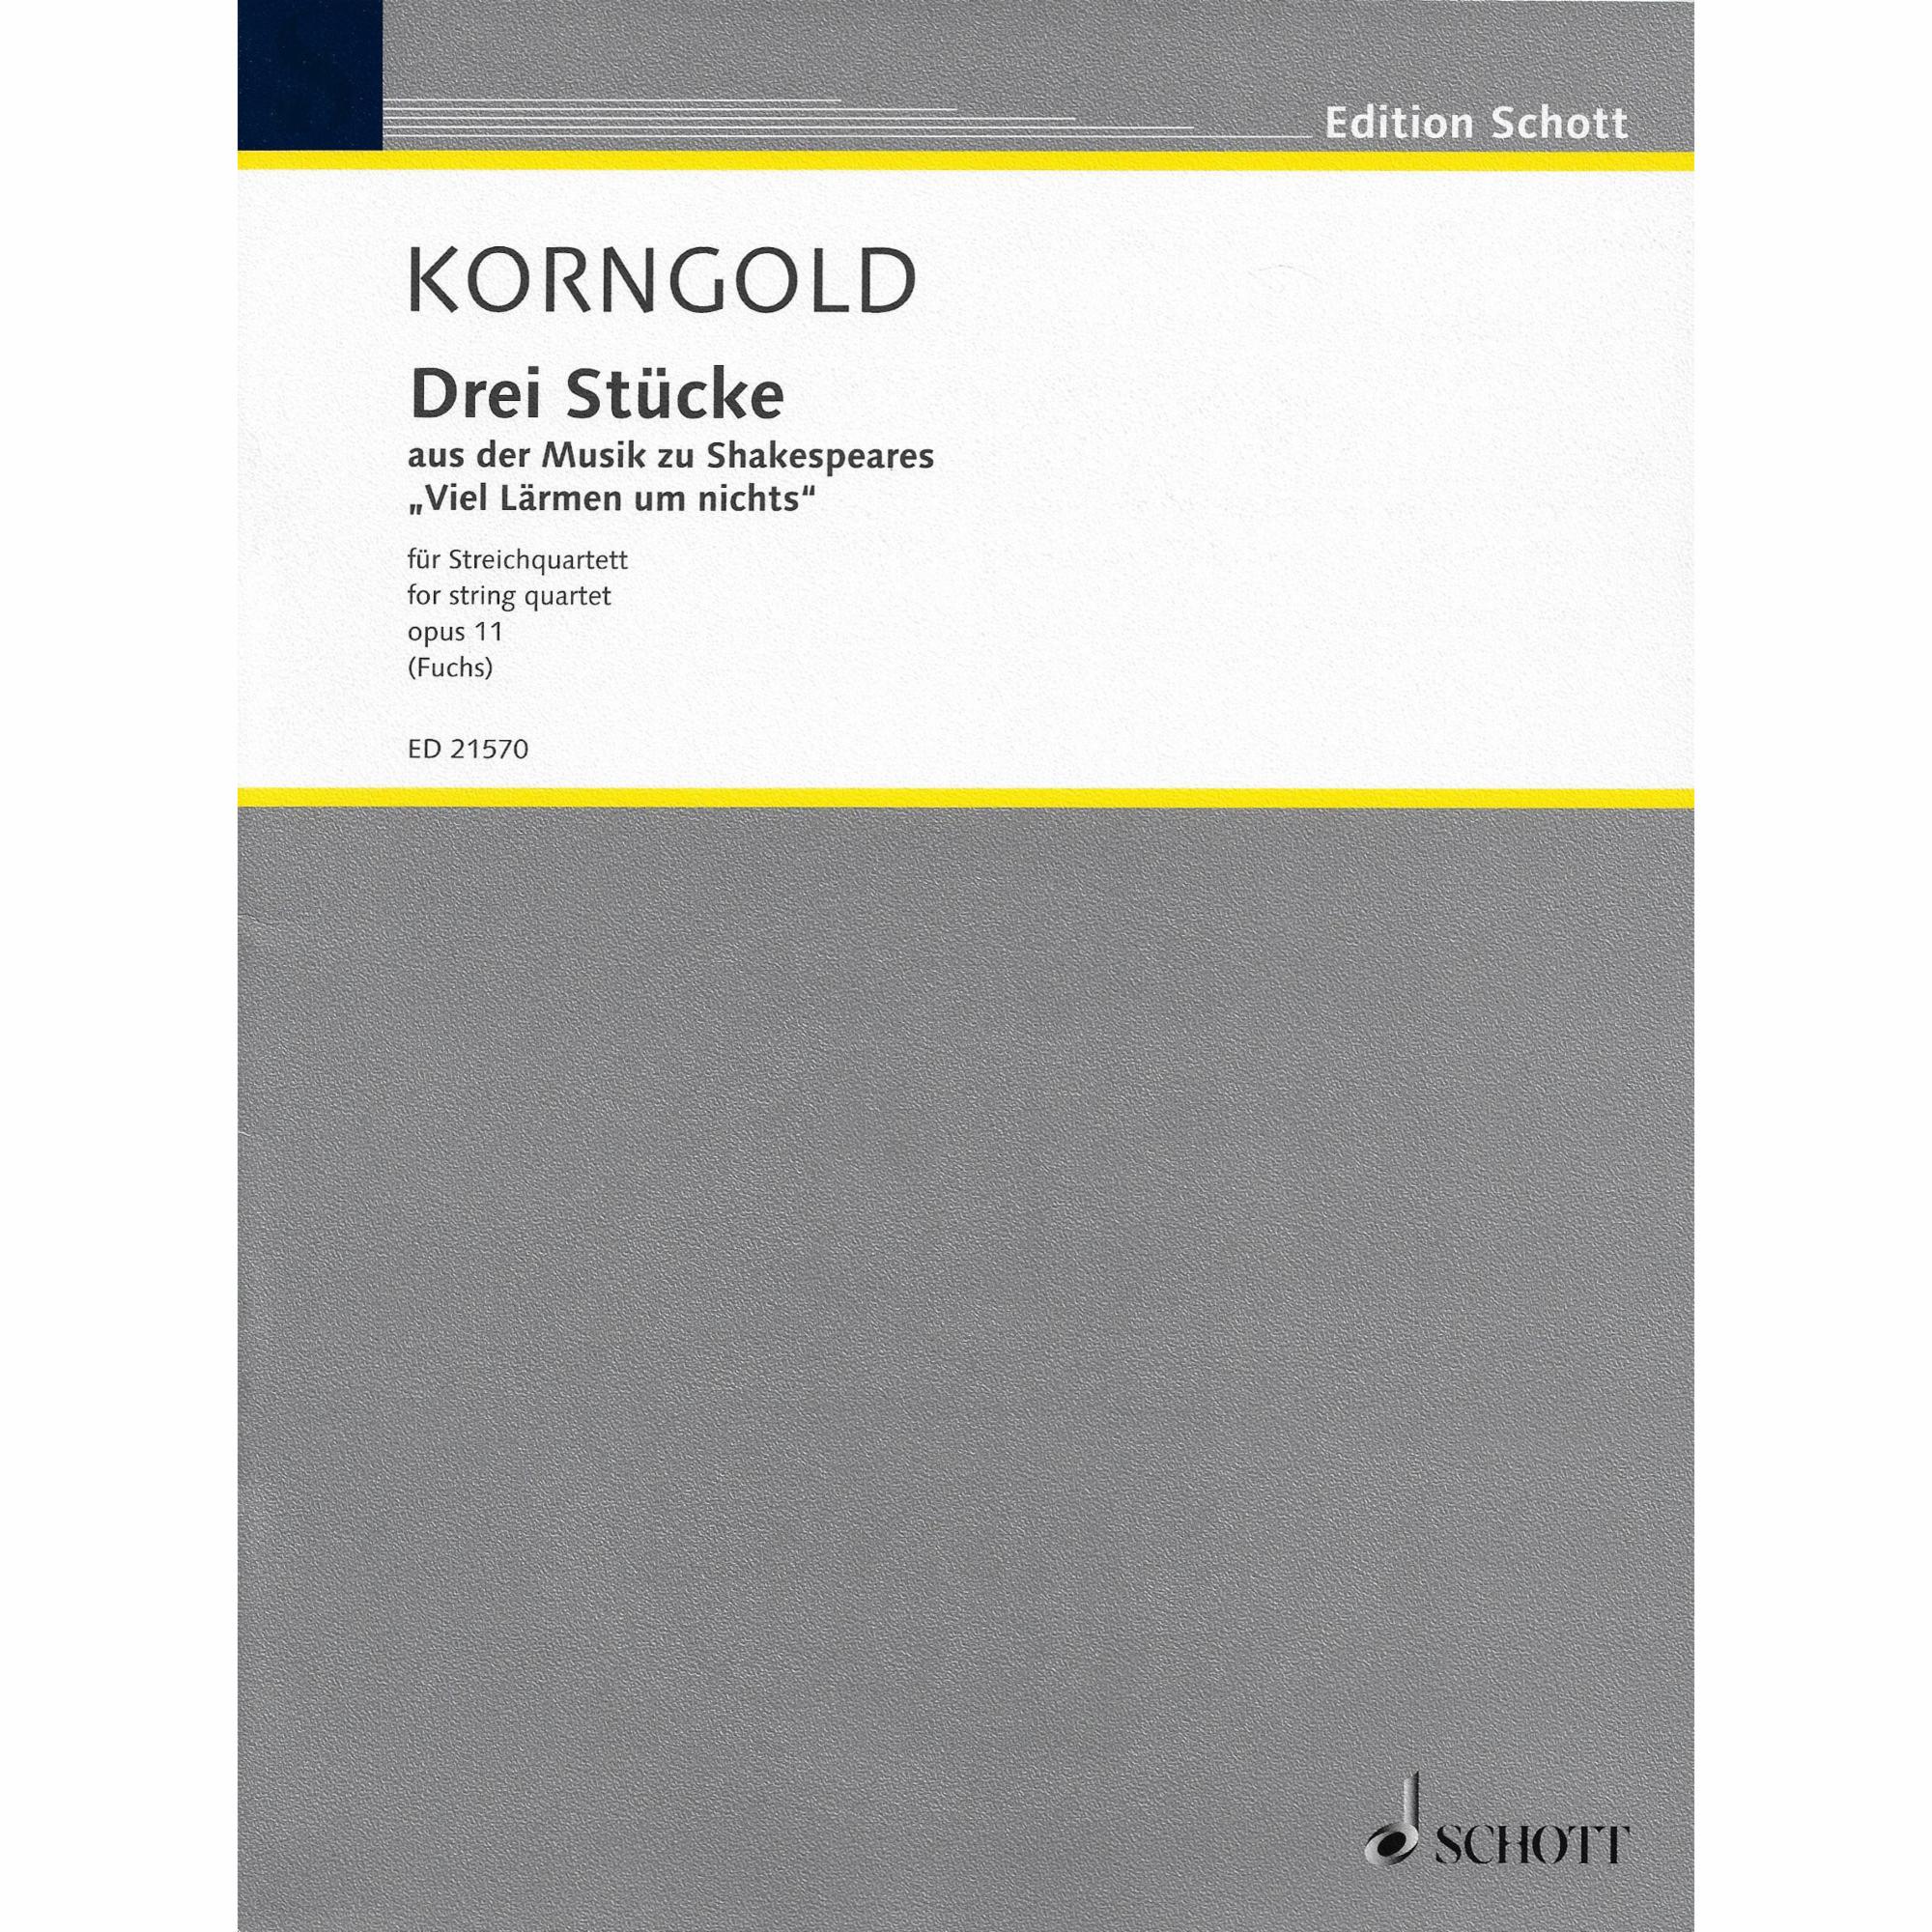 Korngold -- Three Pieces, Op. 11 for String Quartet